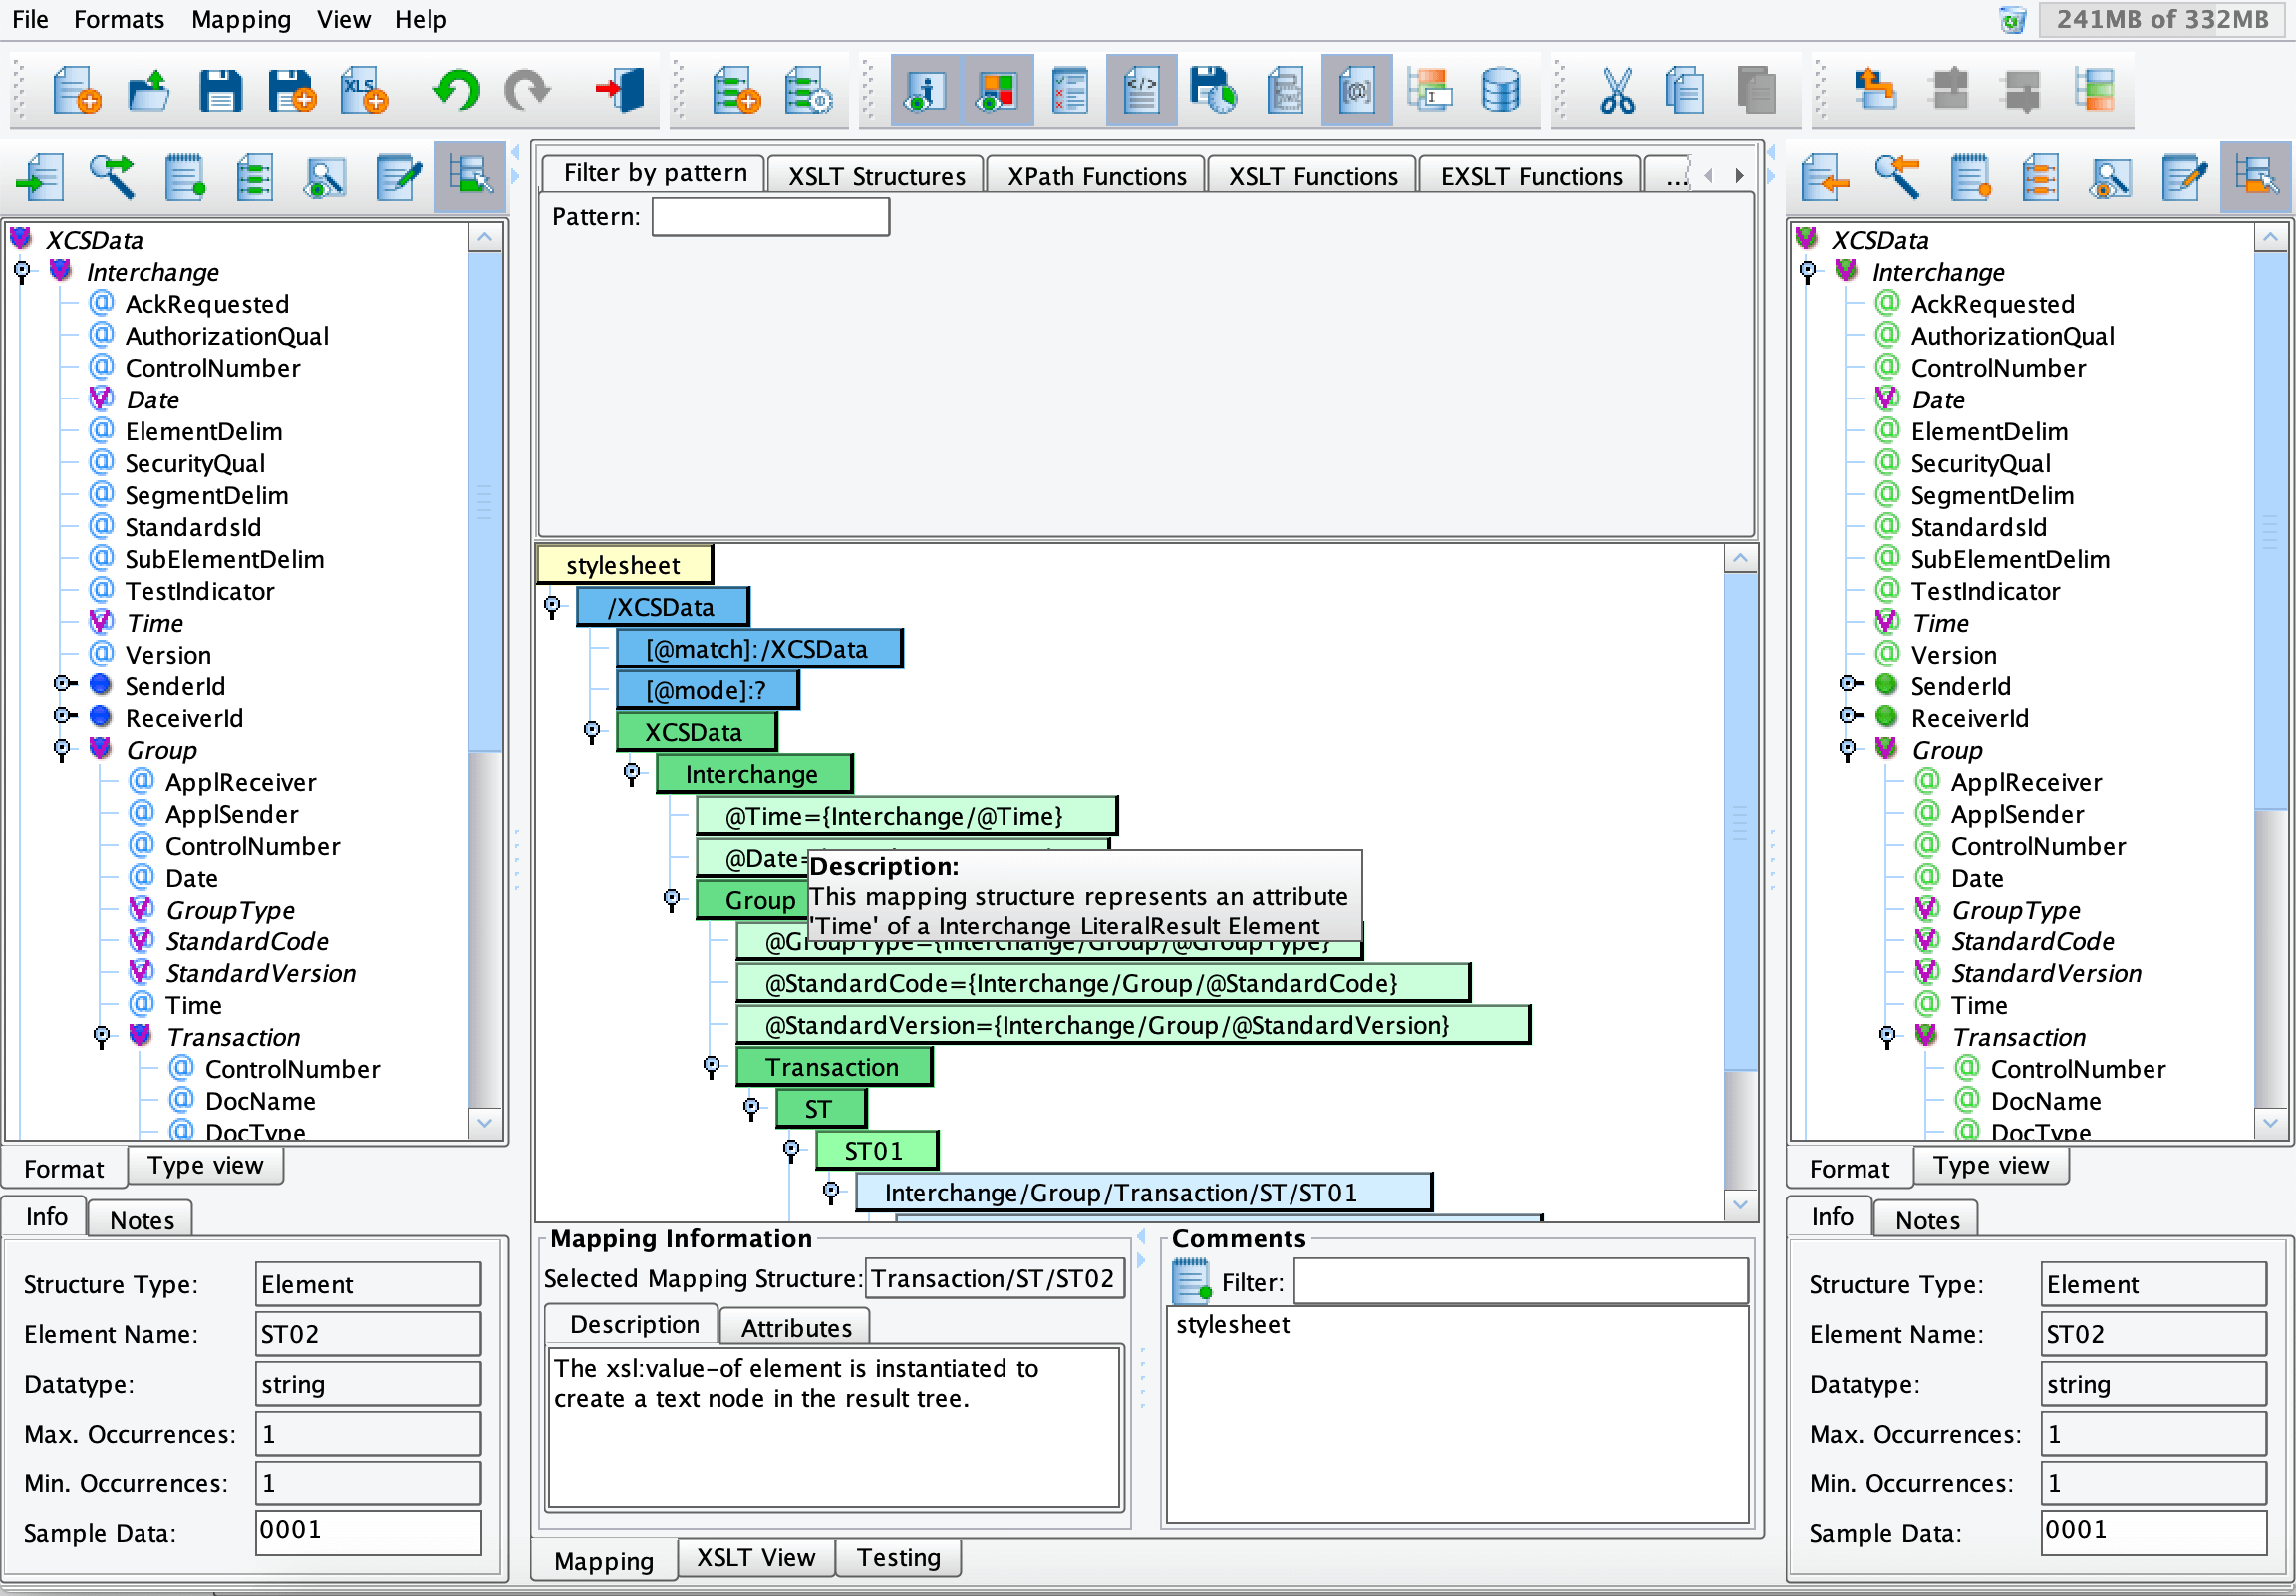 EDI X12 864 transaction example in PilotFish Data Mapper